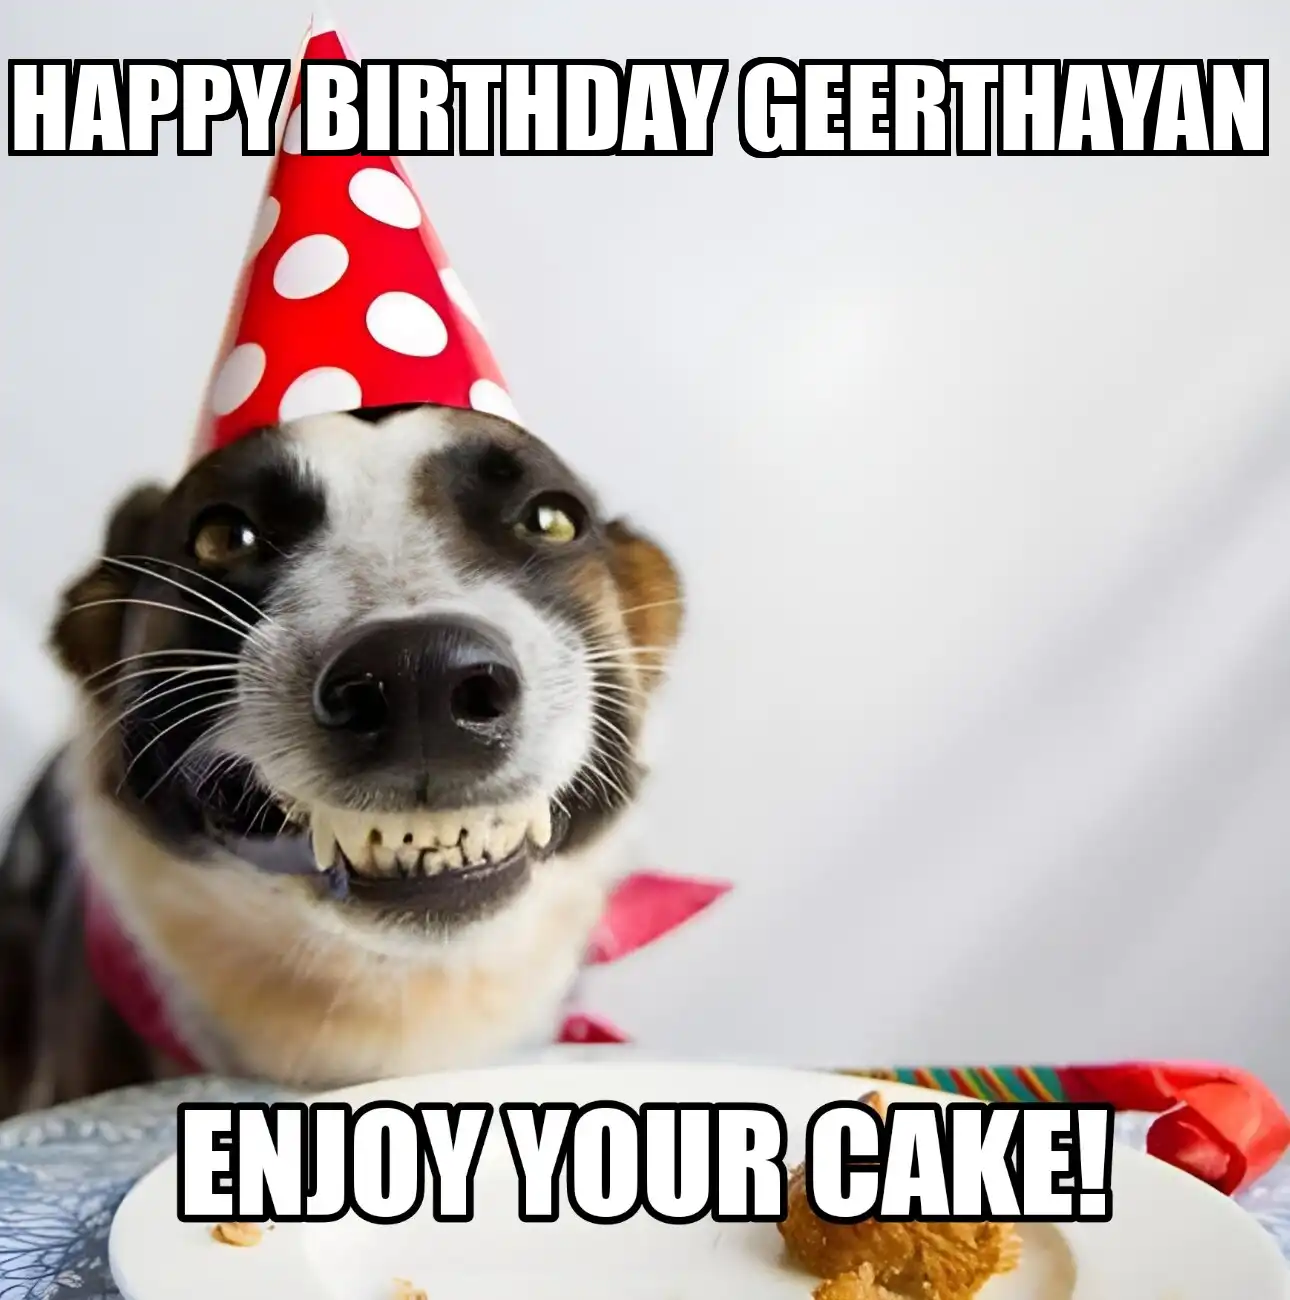 Happy Birthday Geerthayan Enjoy Your Cake Dog Meme